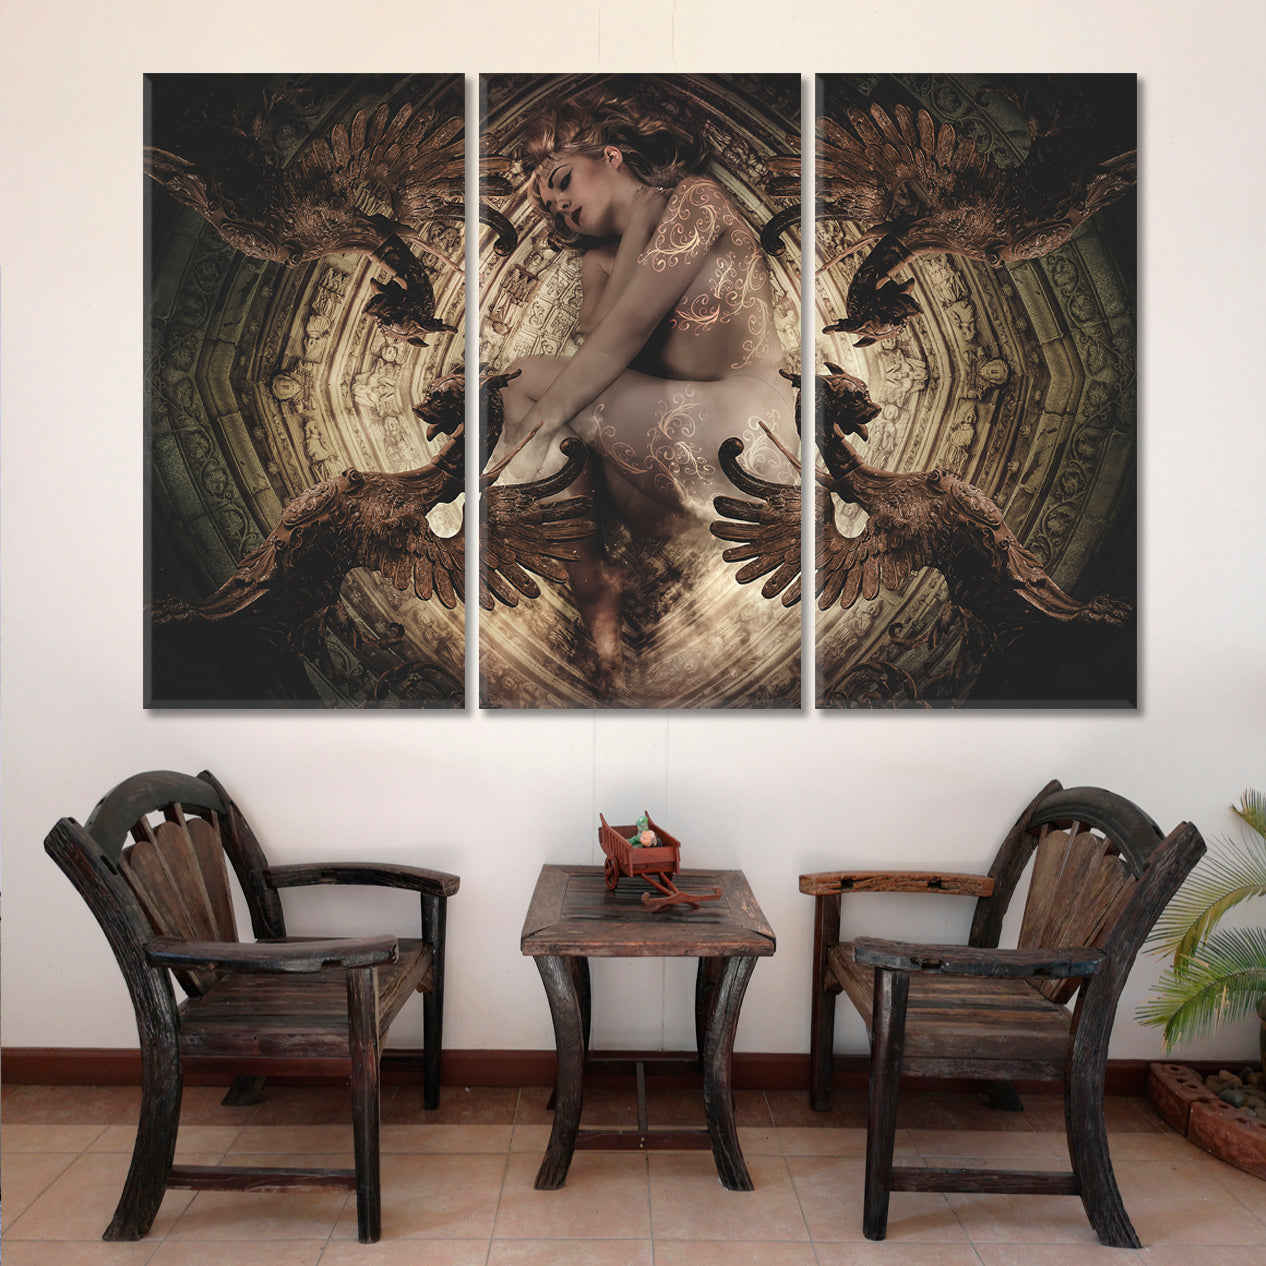 Abstract Fantasy Woman Gothic Renaissance Sculptures Photo Art Artesty 3 panels 36" x 24" 